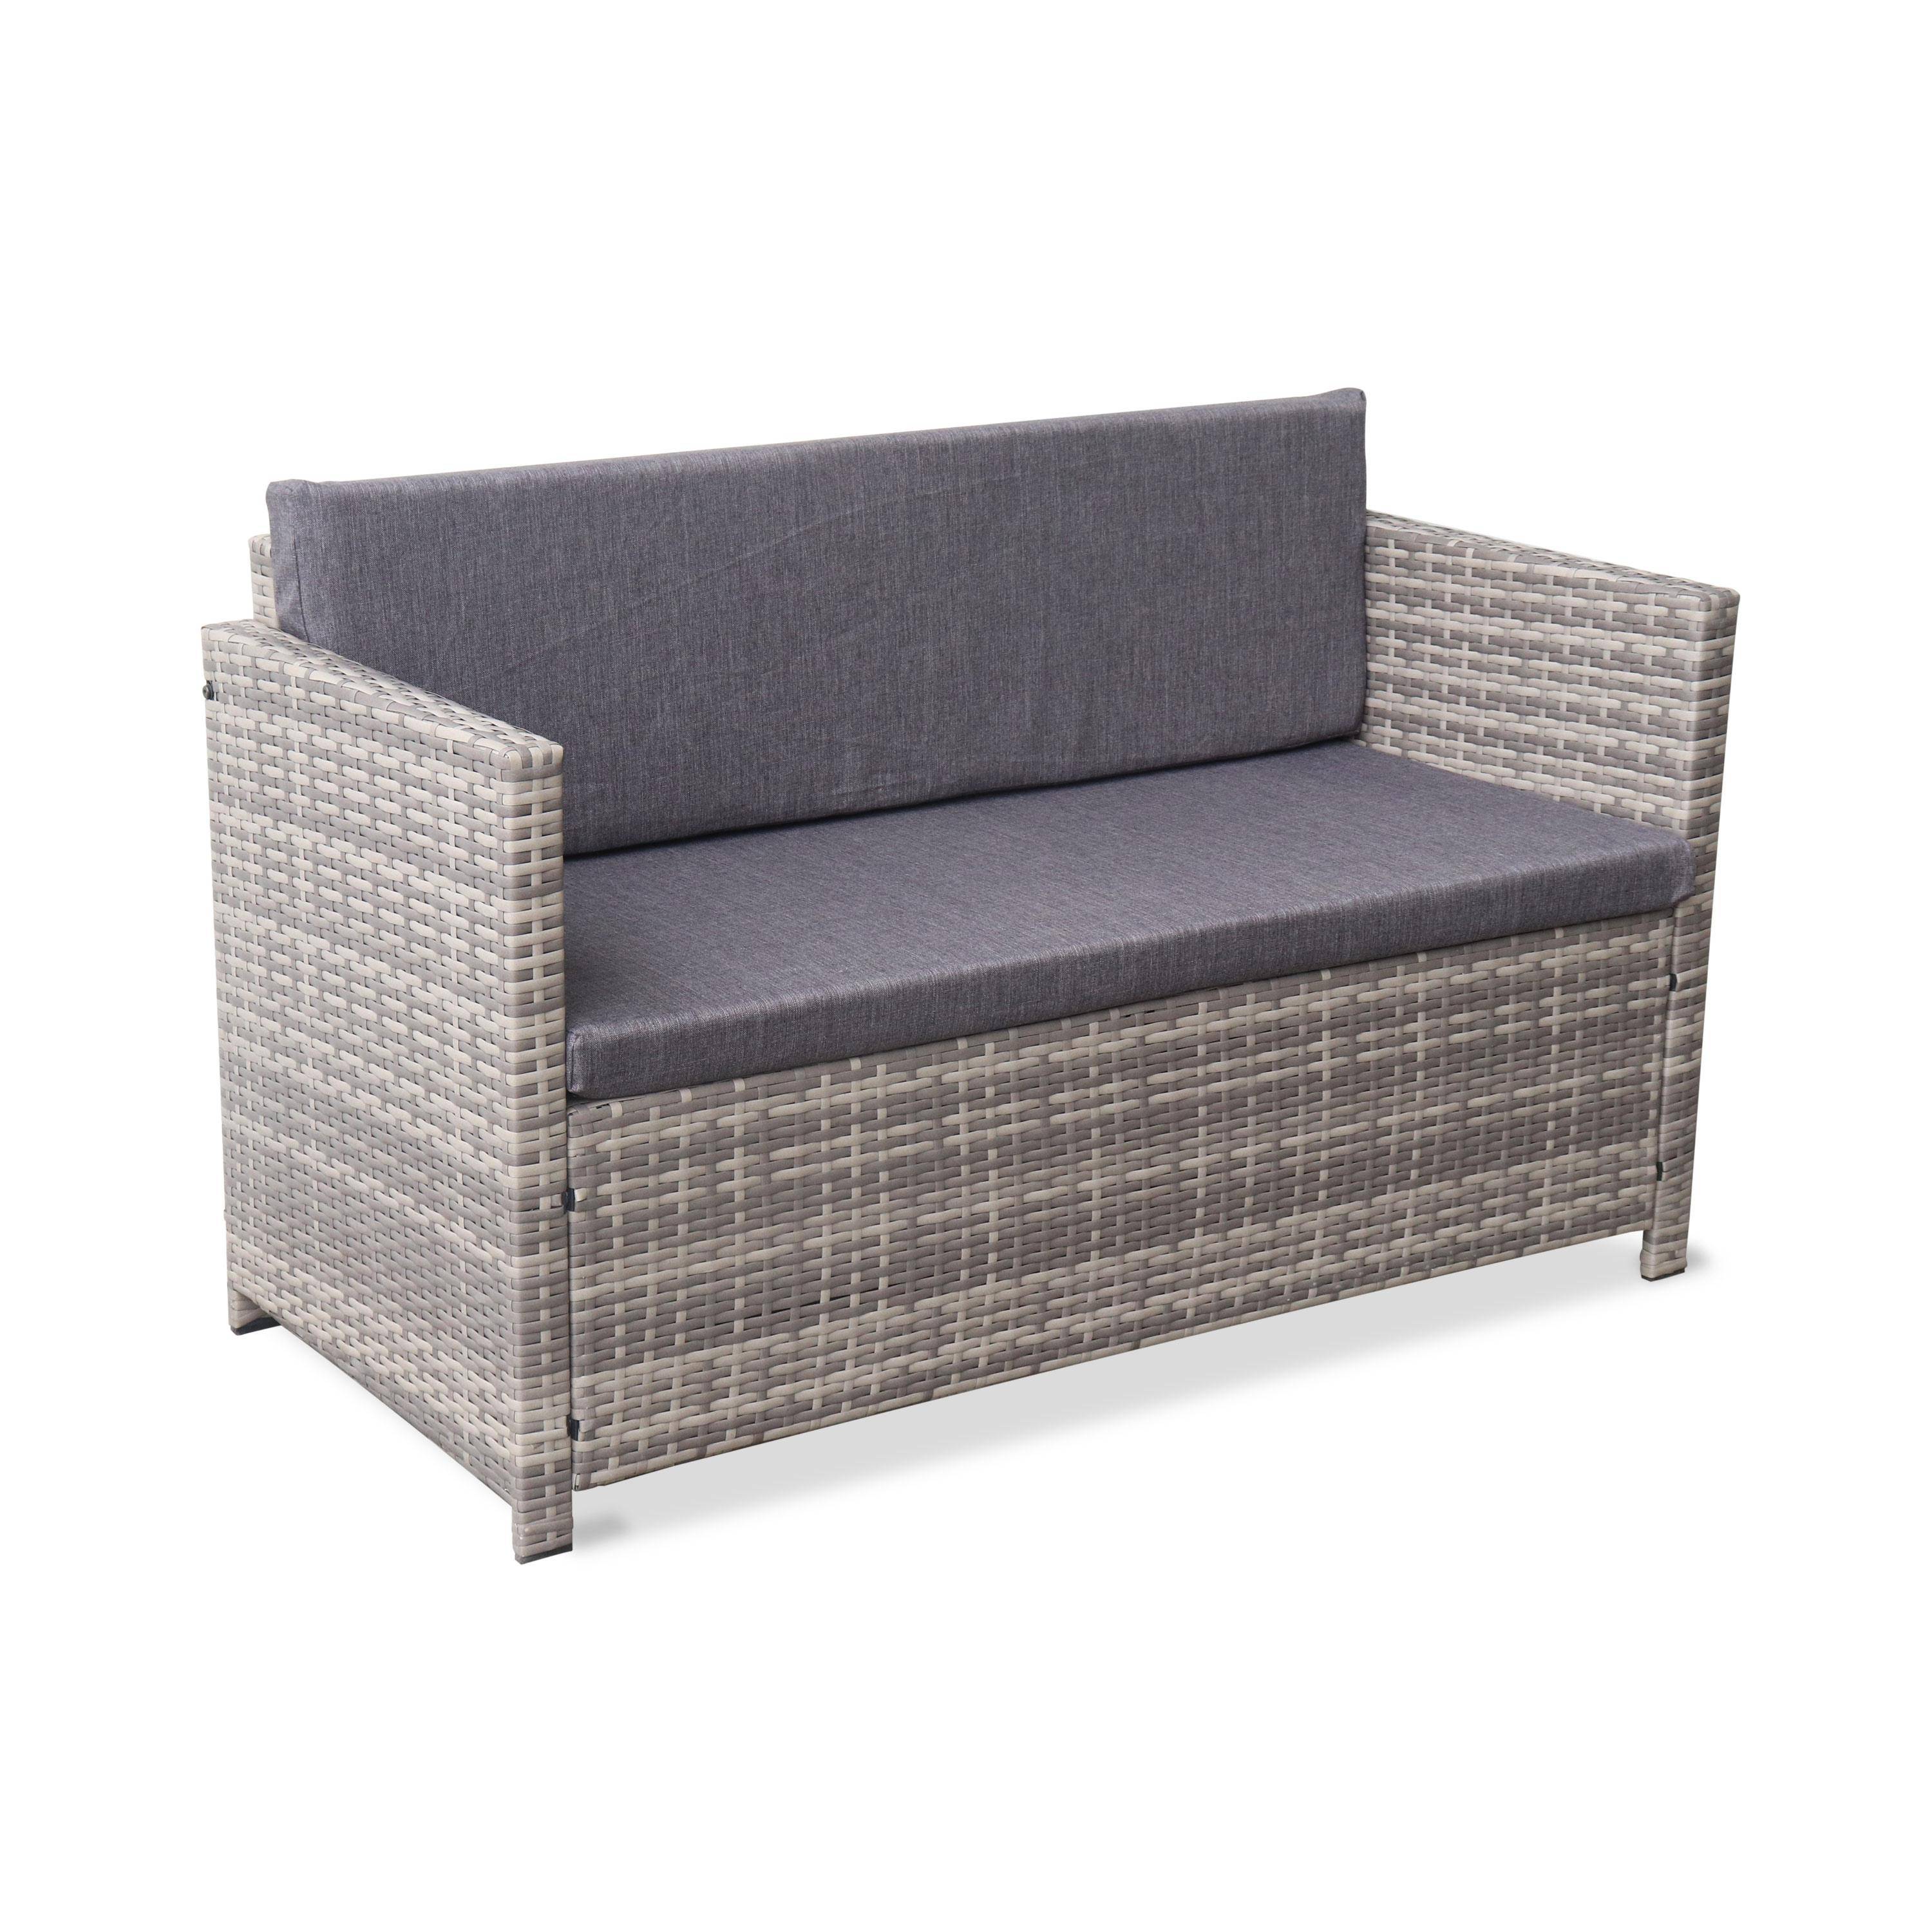 4-seater polyrattan garden sofa set - sofa, 2 armchairs, coffee table - Perugia - Mixed Grey rattan, Grey cushions,sweeek,Photo3